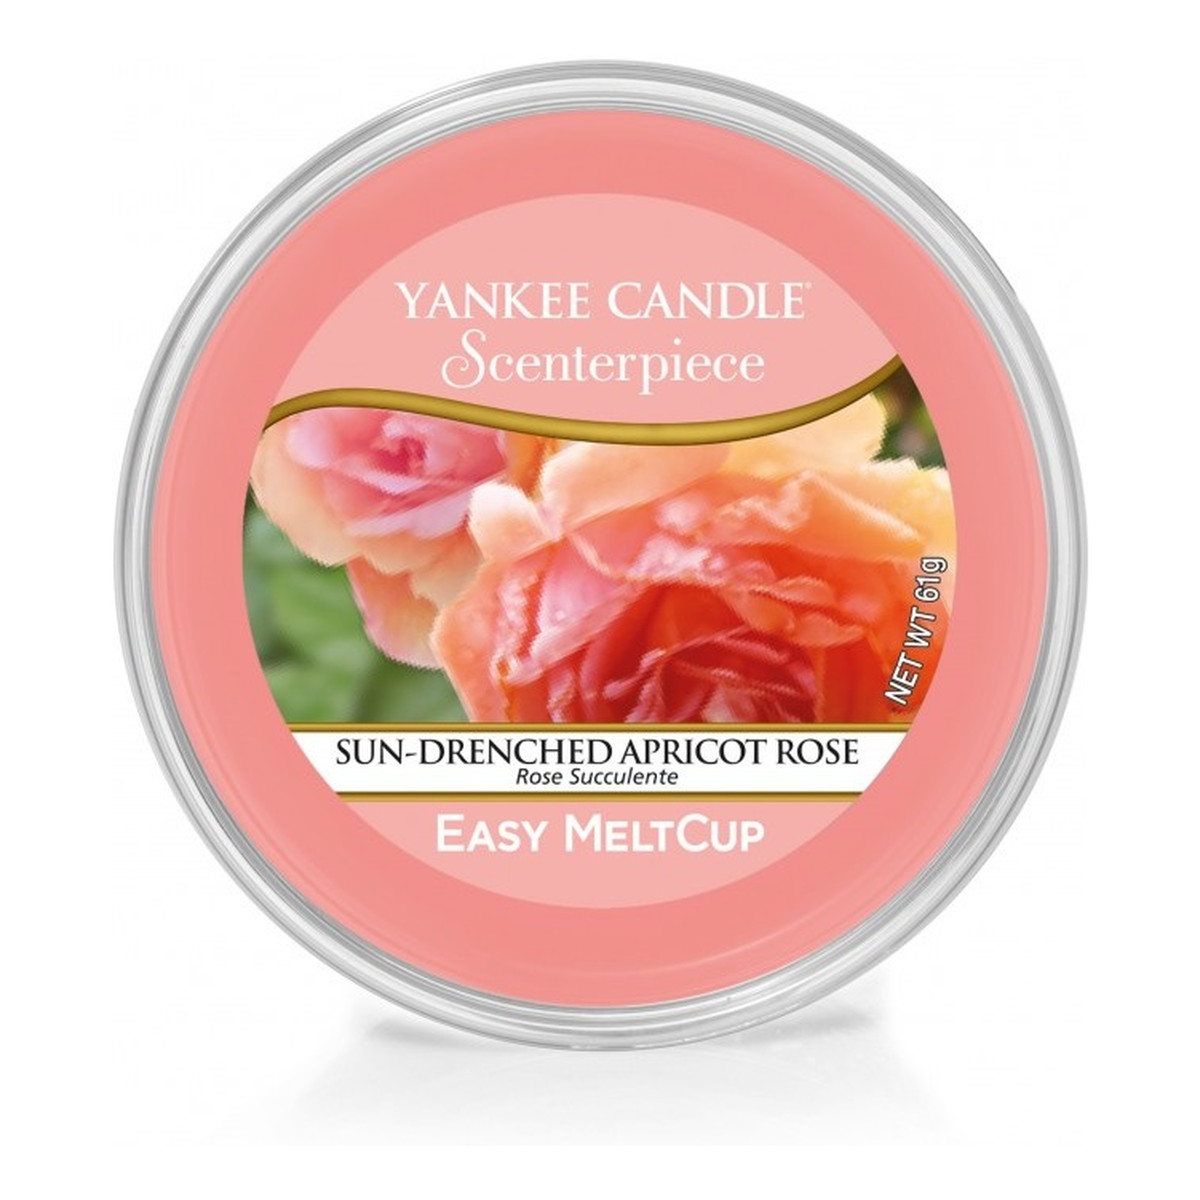 Yankee Candle Scenterpiece wosk do elektrycznego kominka Sun-Drenched Apricot Rose 61g